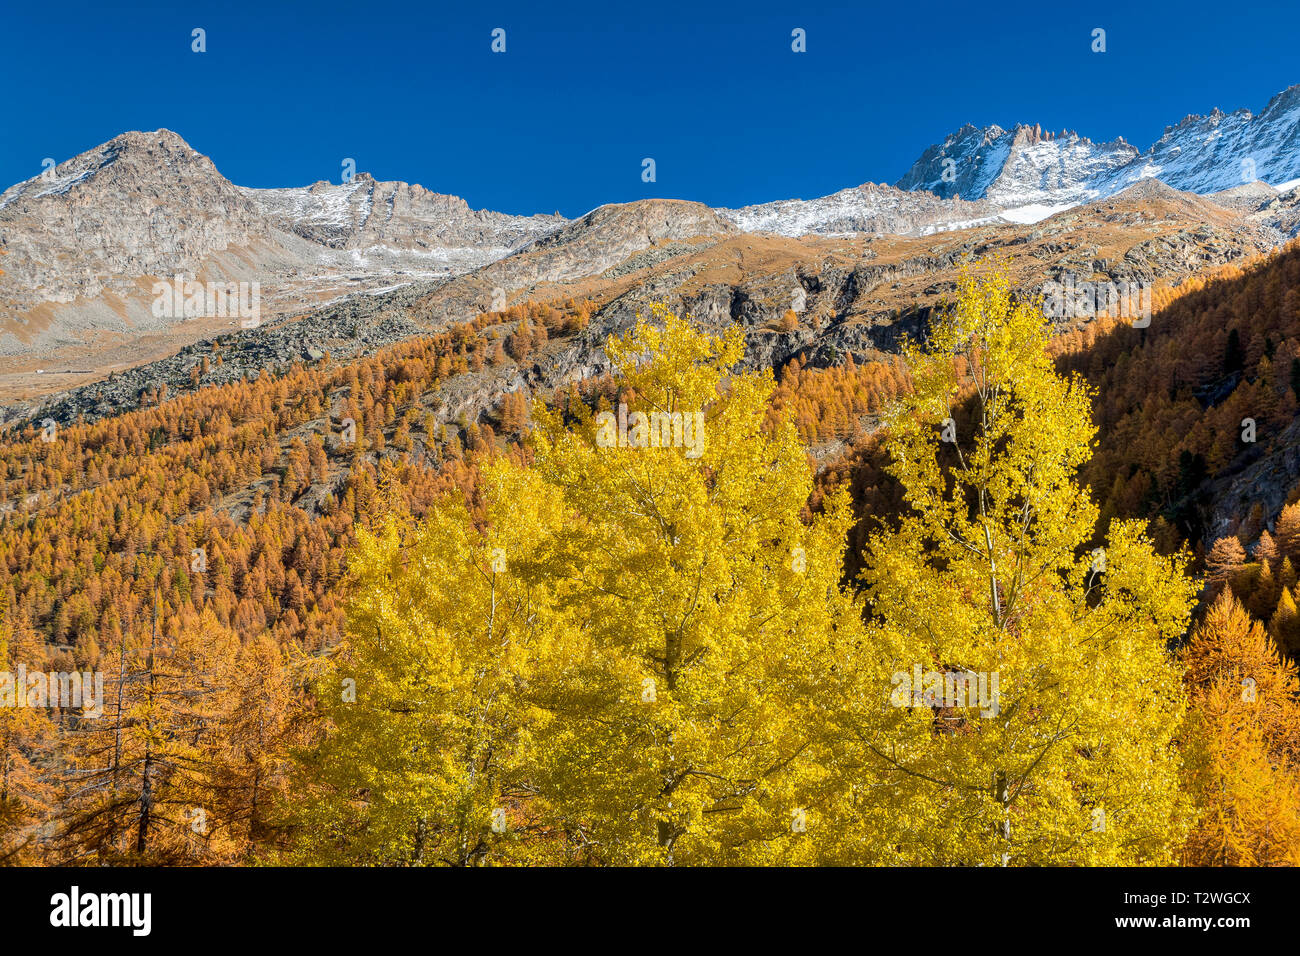 Italy, Valsavarenche, Gran Paradiso National Park, Massif du Grand Paradis, common aspen (Populus tremula) and European larch forest in autumn Stock Photo